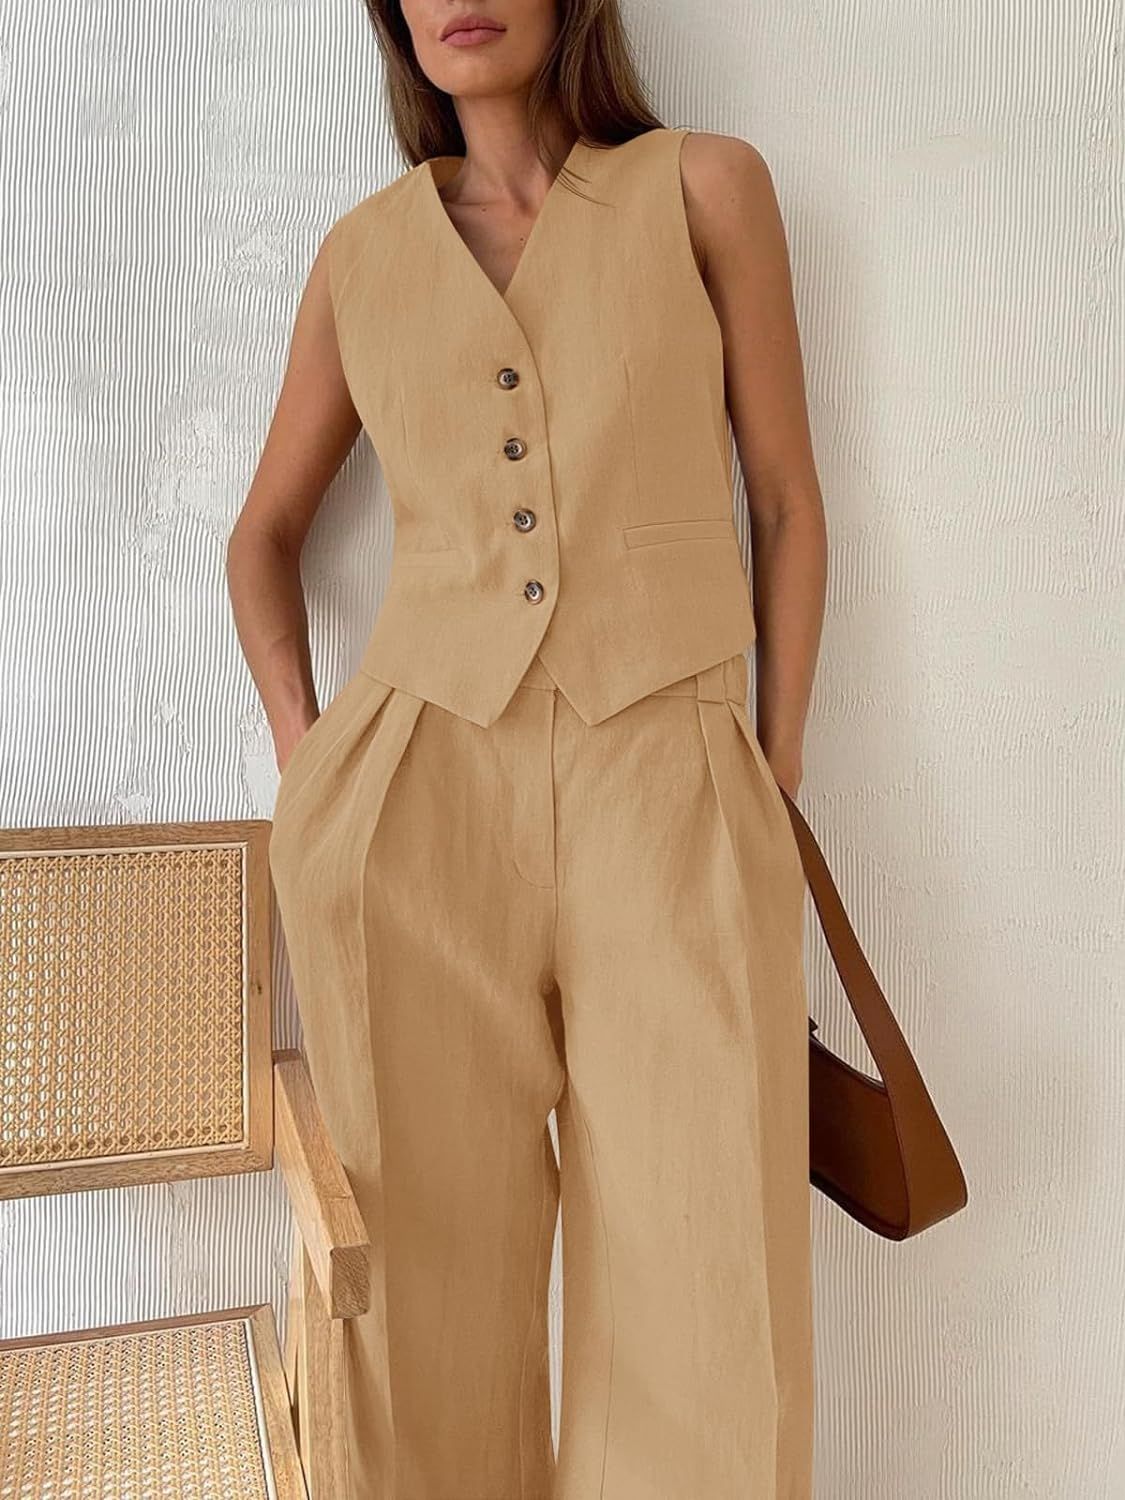 Cicy Bell Women's 2 Piece Outfits V Neck Crop Vest Blazer and Wide Leg Suit Pants Sets | Amazon (US)